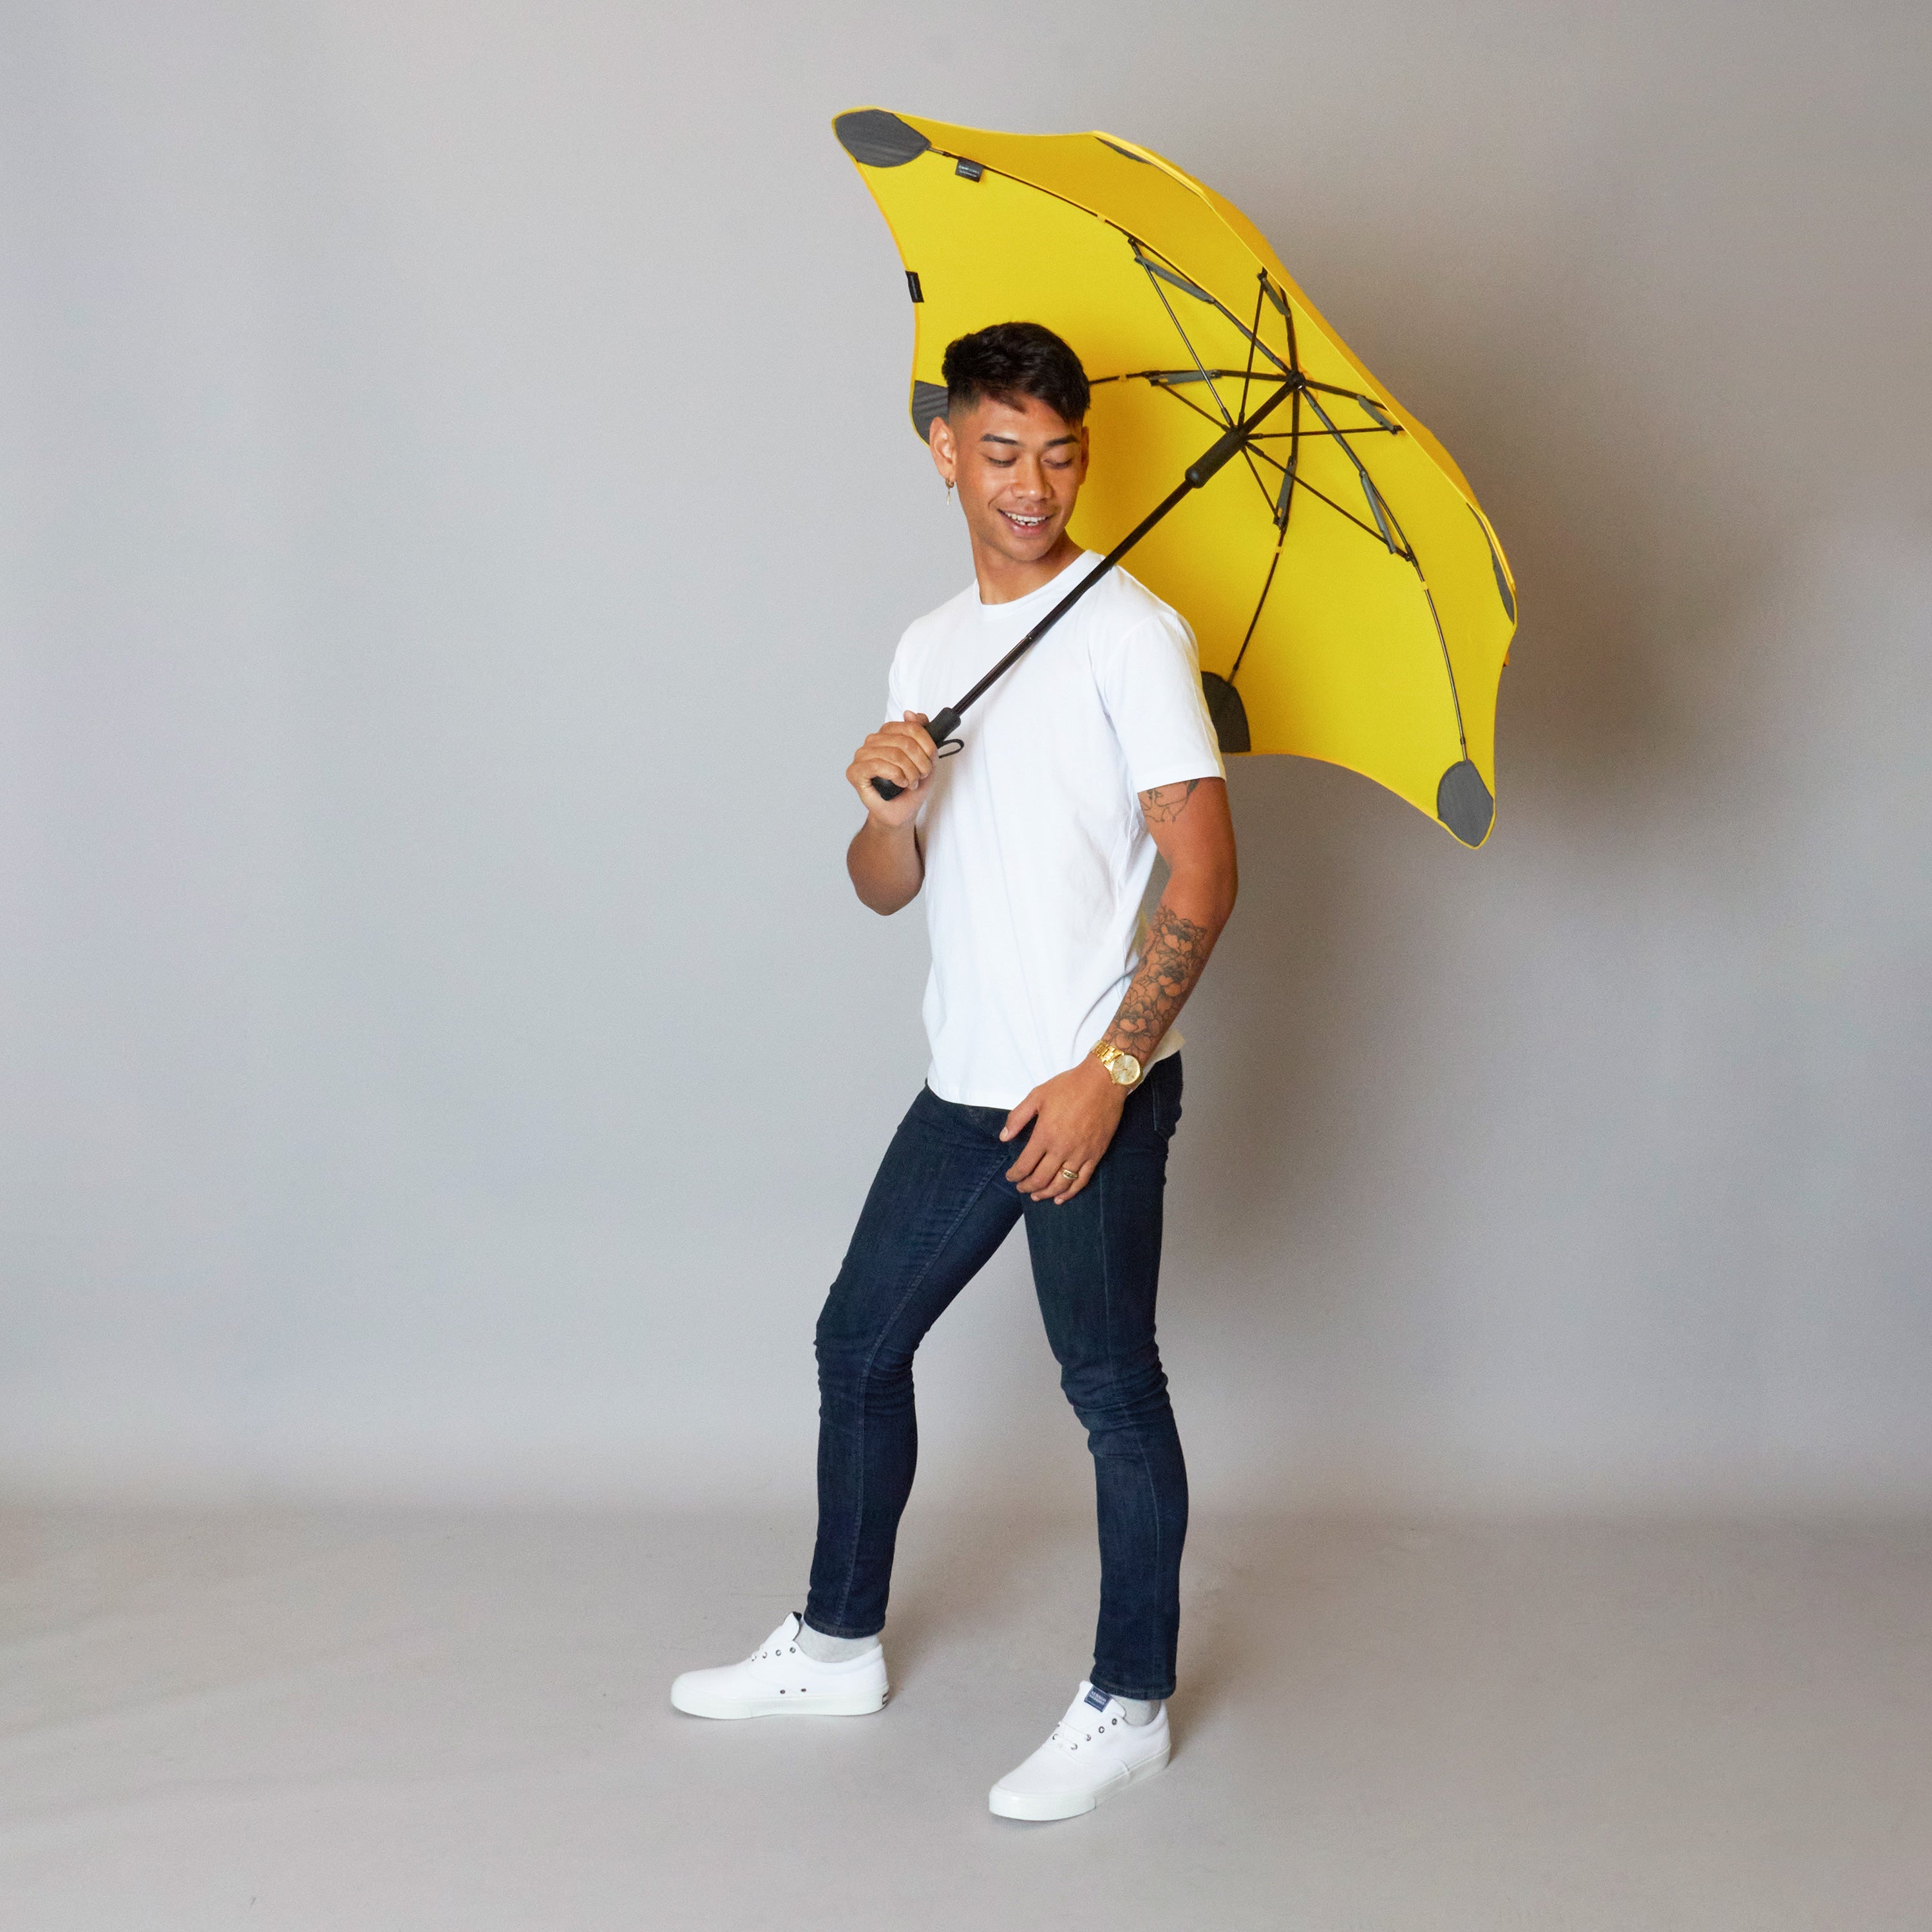 2020 Classic Yellow Blunt Umbrella Model Side View